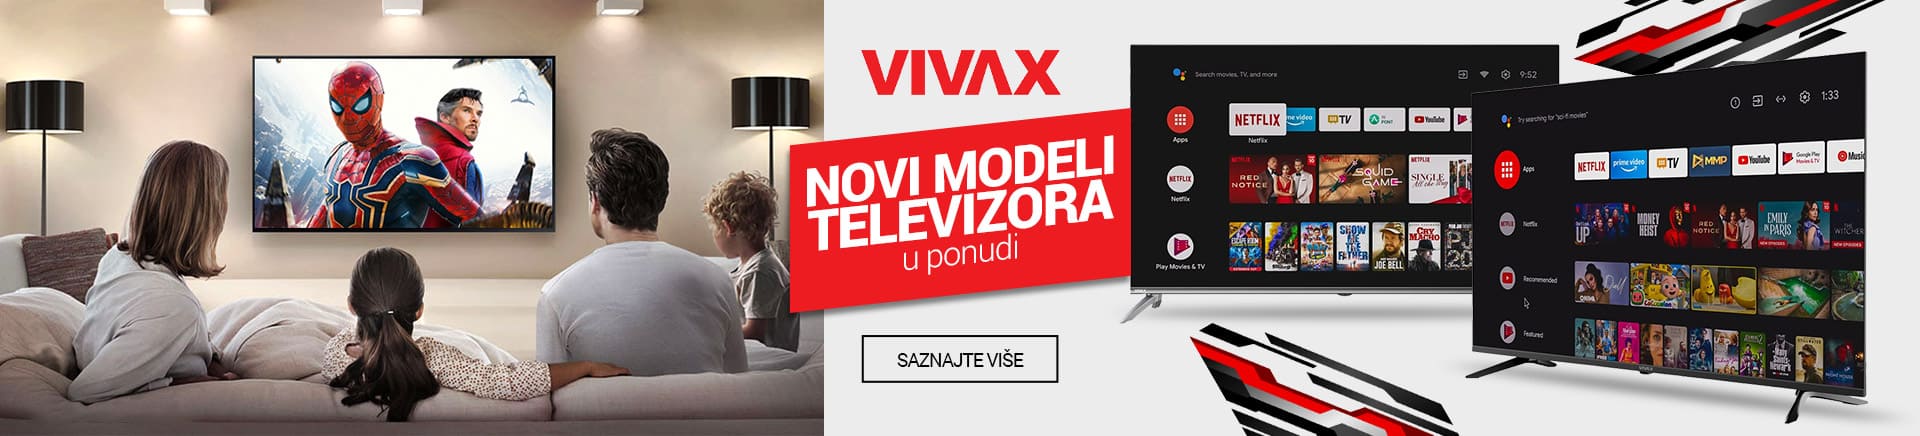 VIVAX - Novi modeli televizora u ponudi